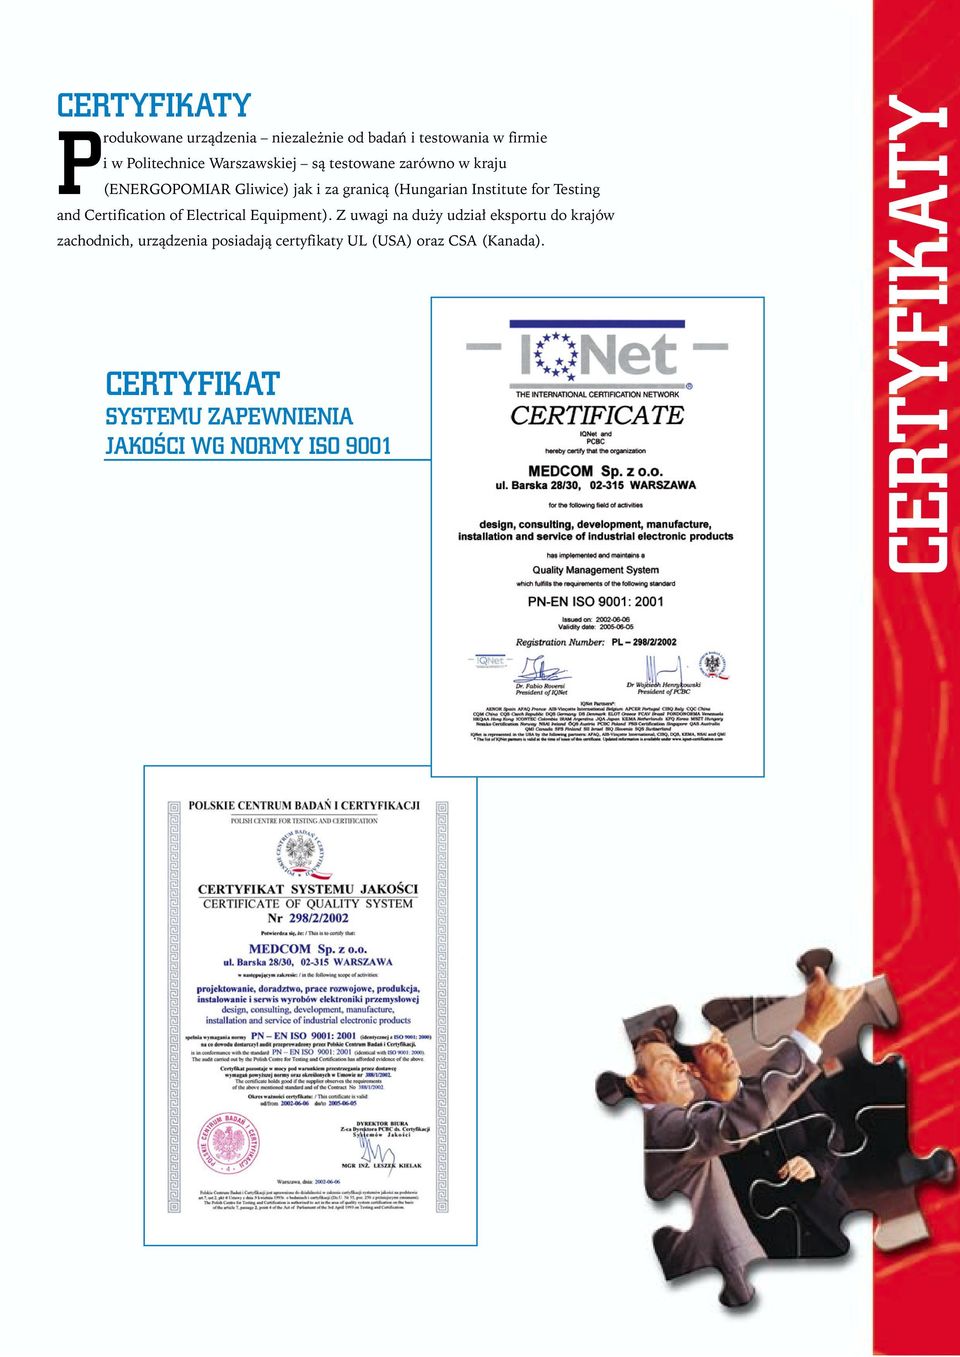 Certificatin f Electrical Equipment).